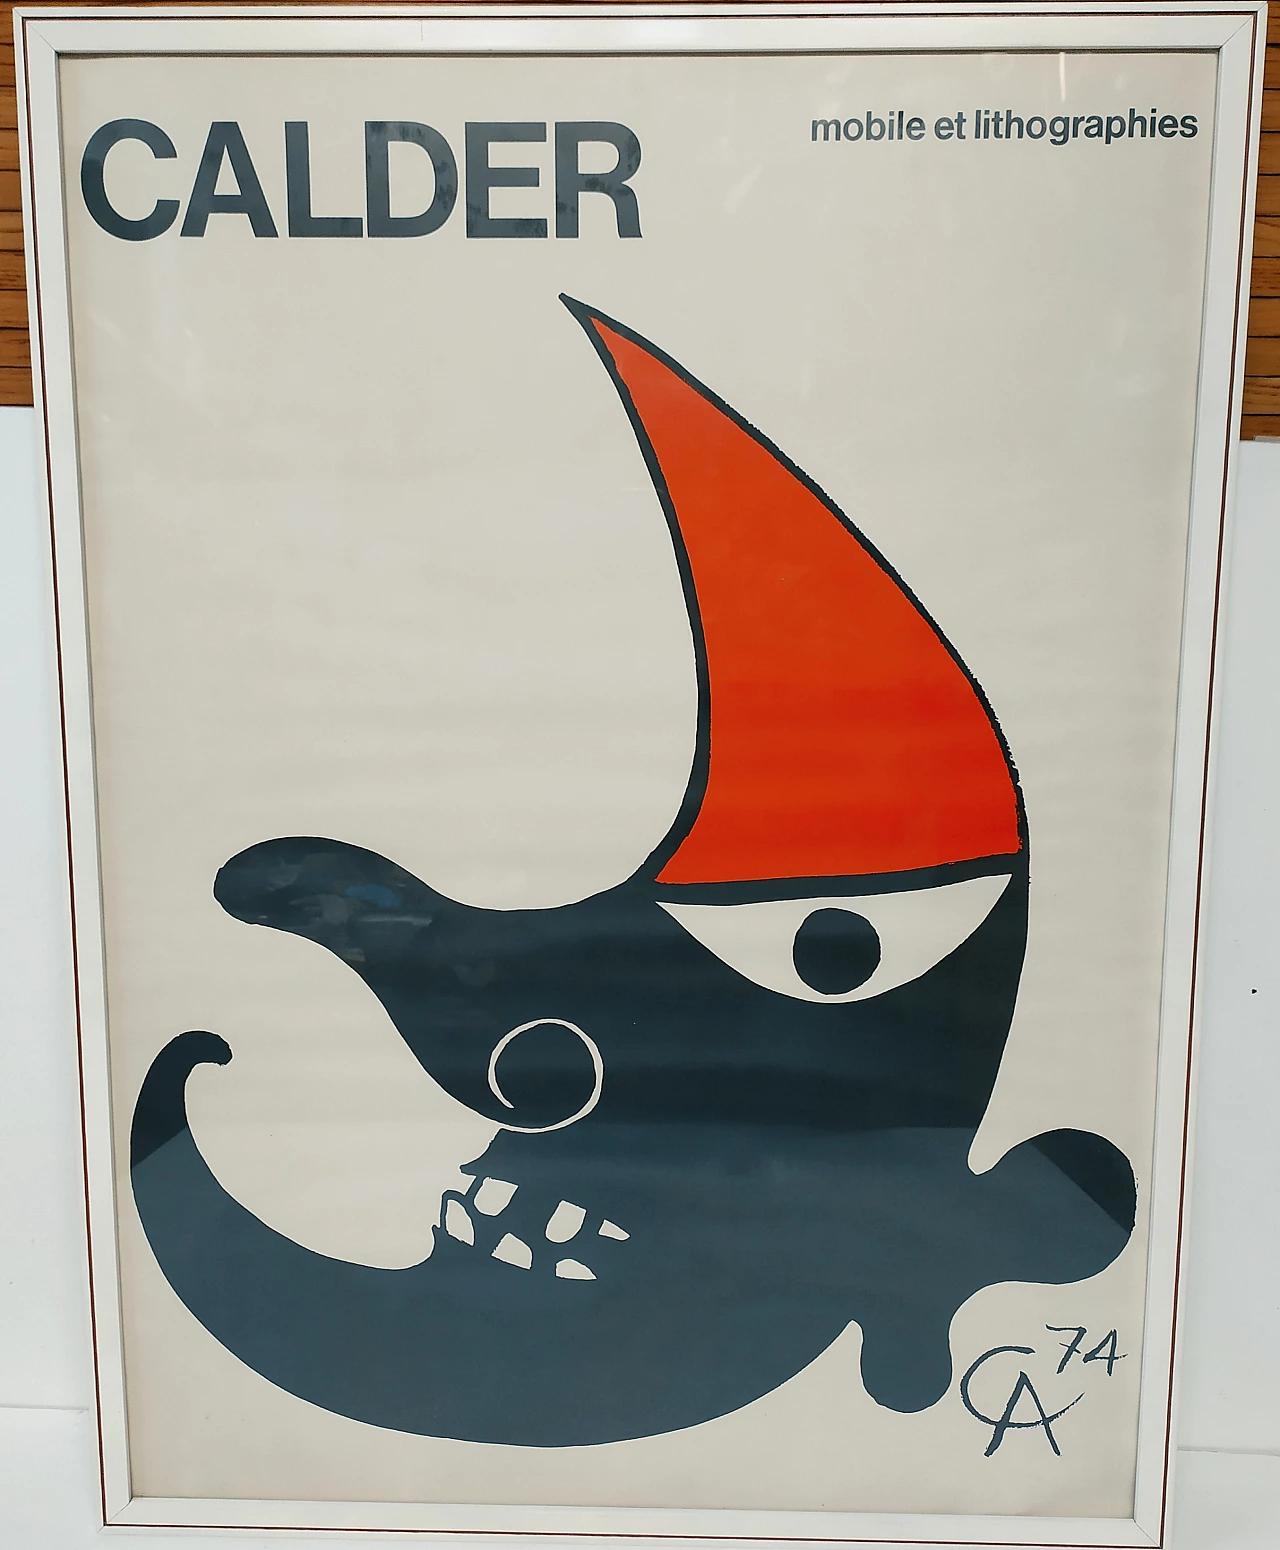 Alexander Calder, Mobile et Lithographies, litograph, 1974 1